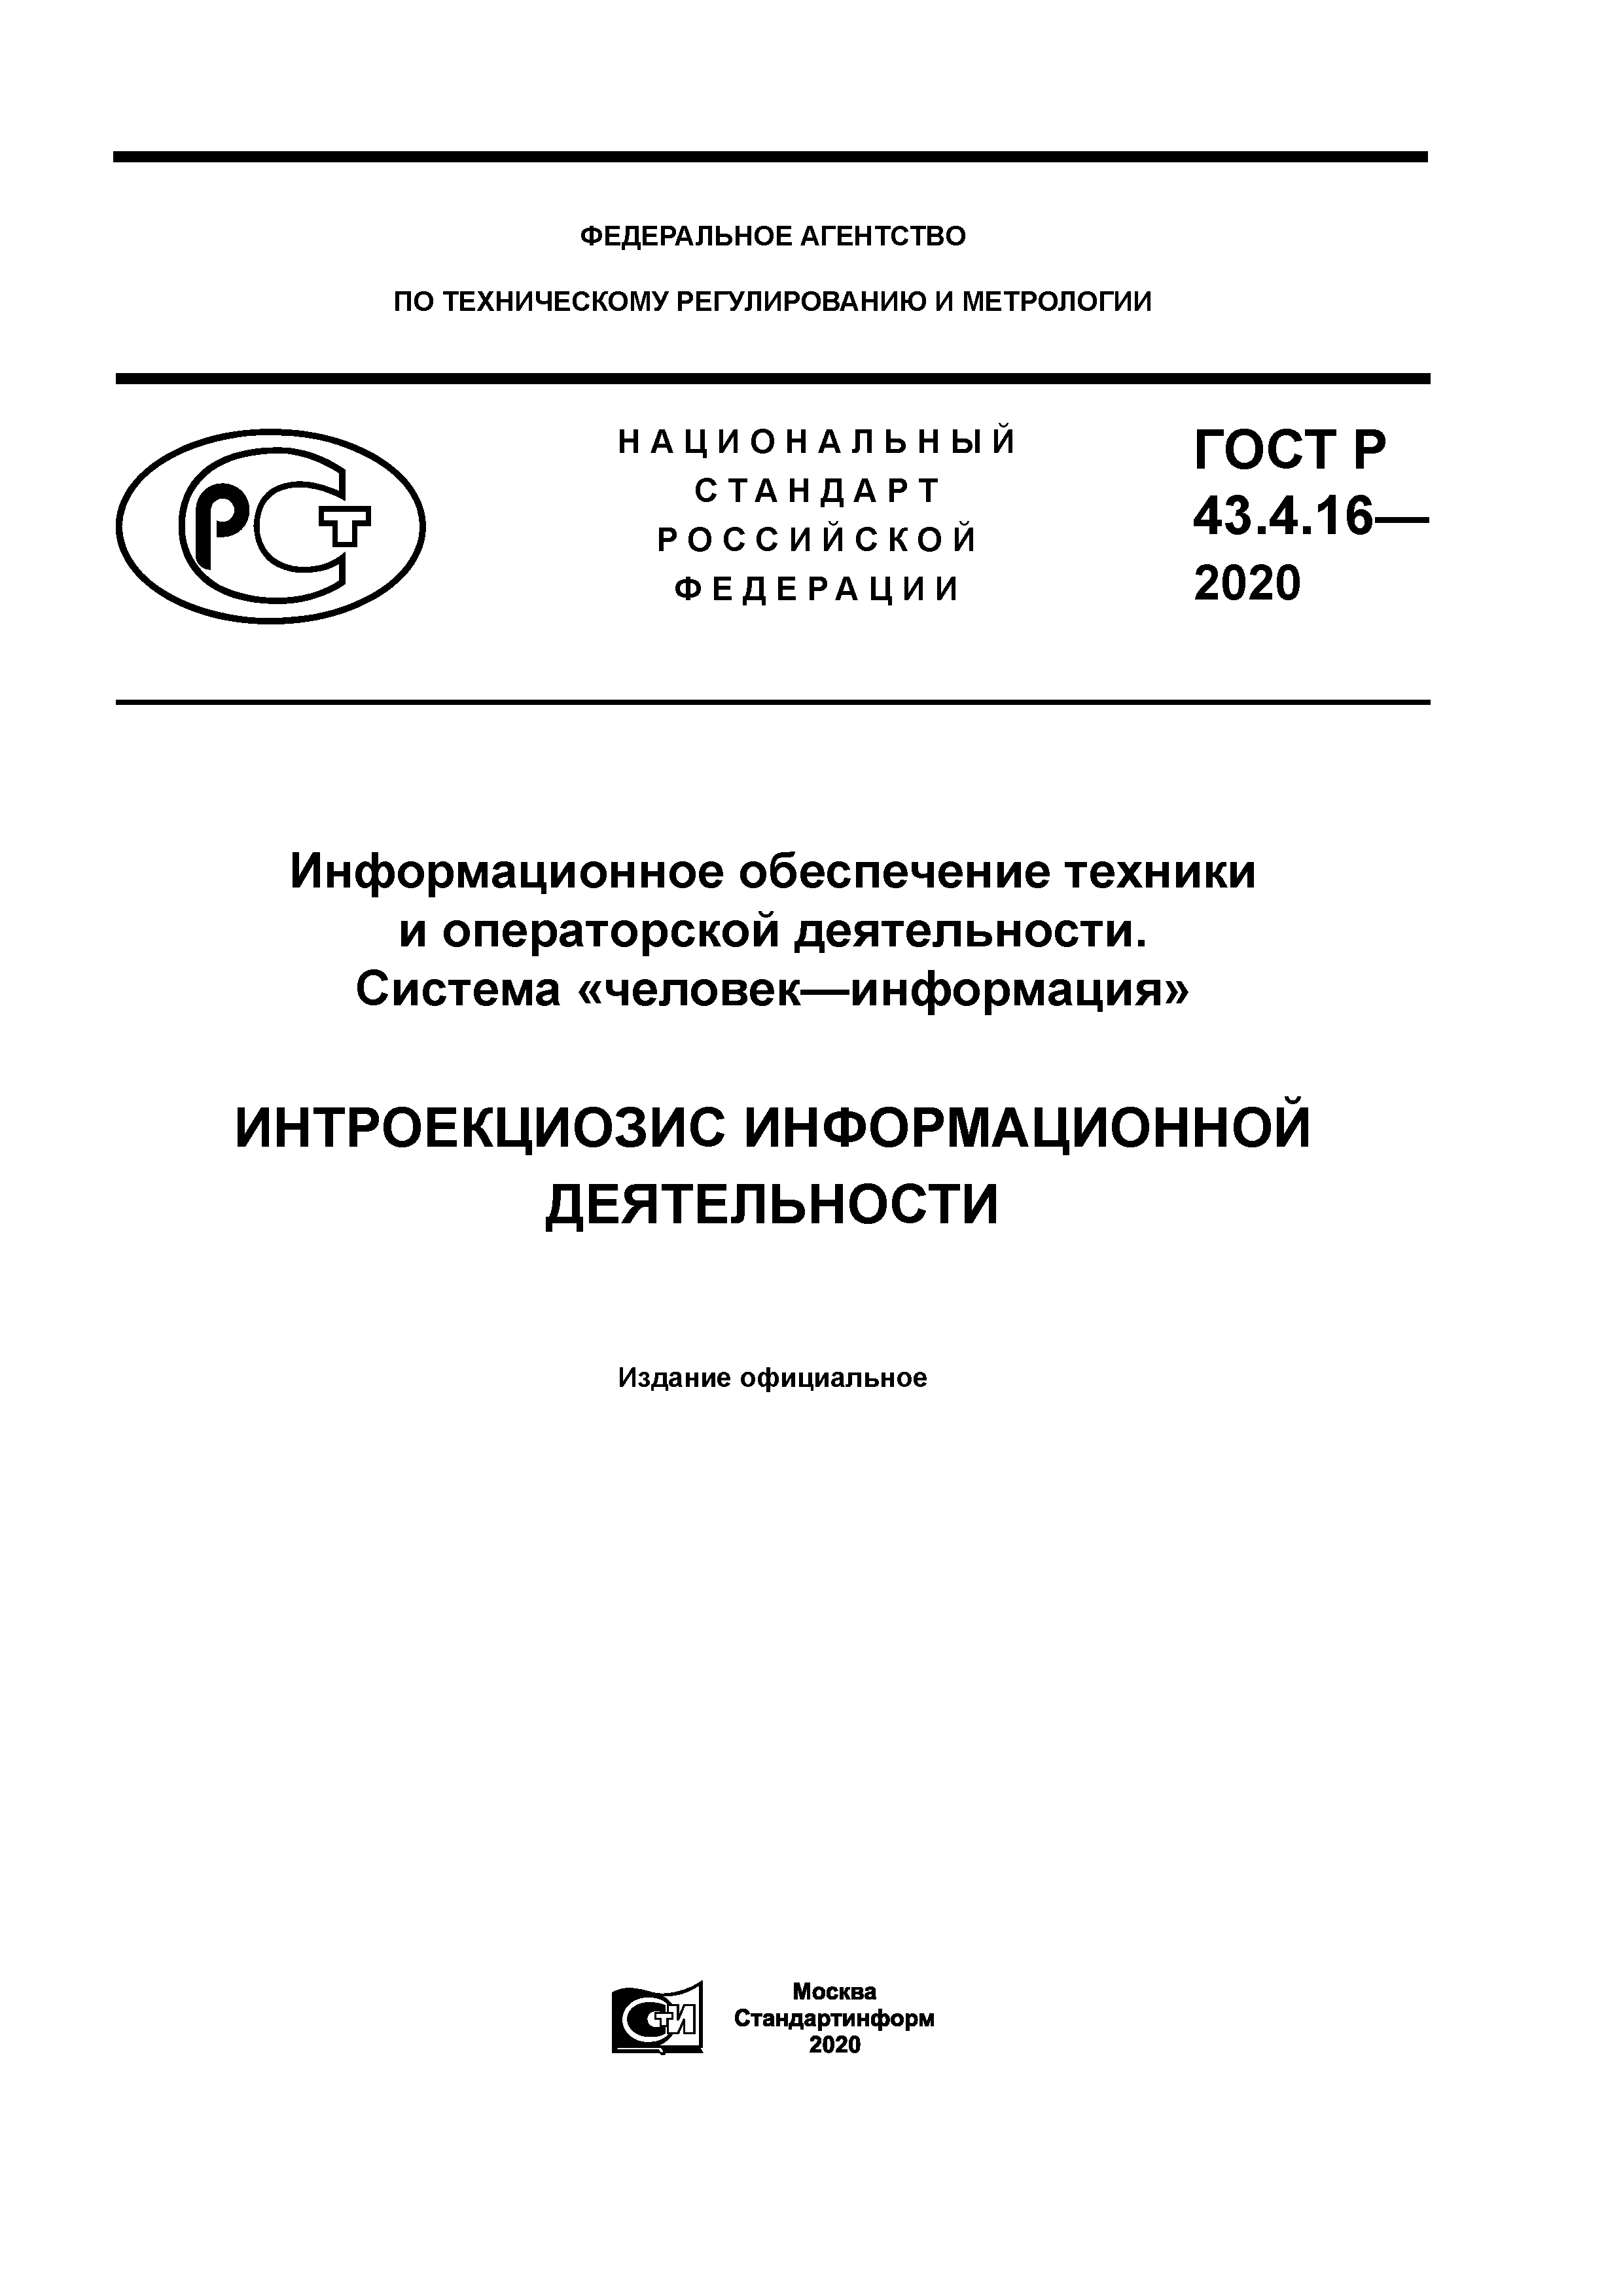 ГОСТ Р 43.4.16-2020